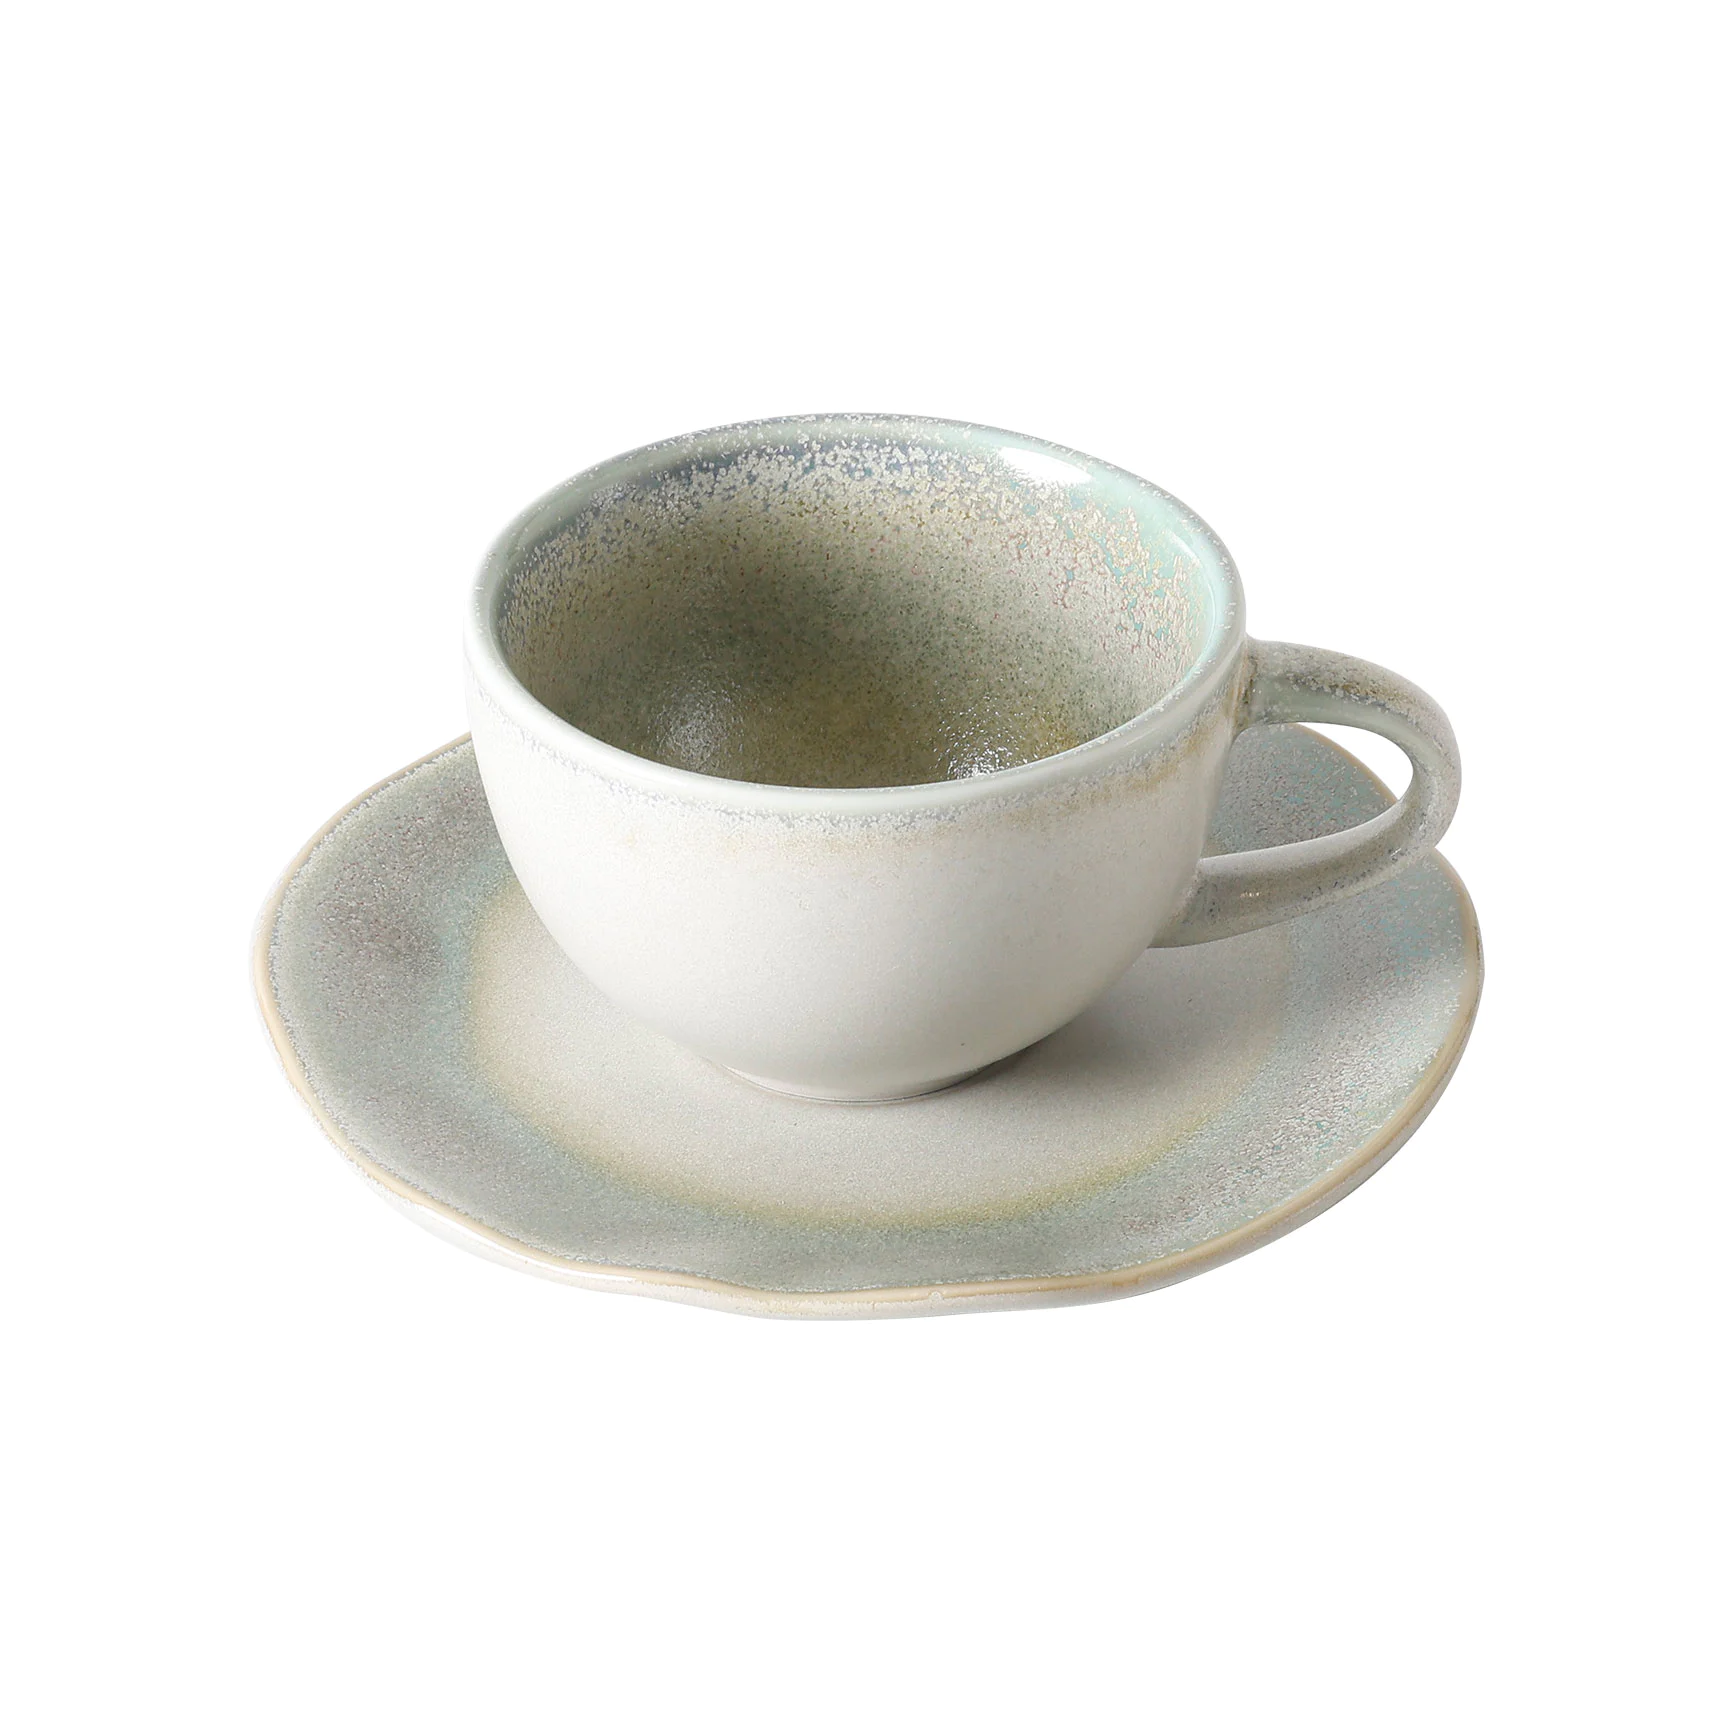 Coffee cup saucer